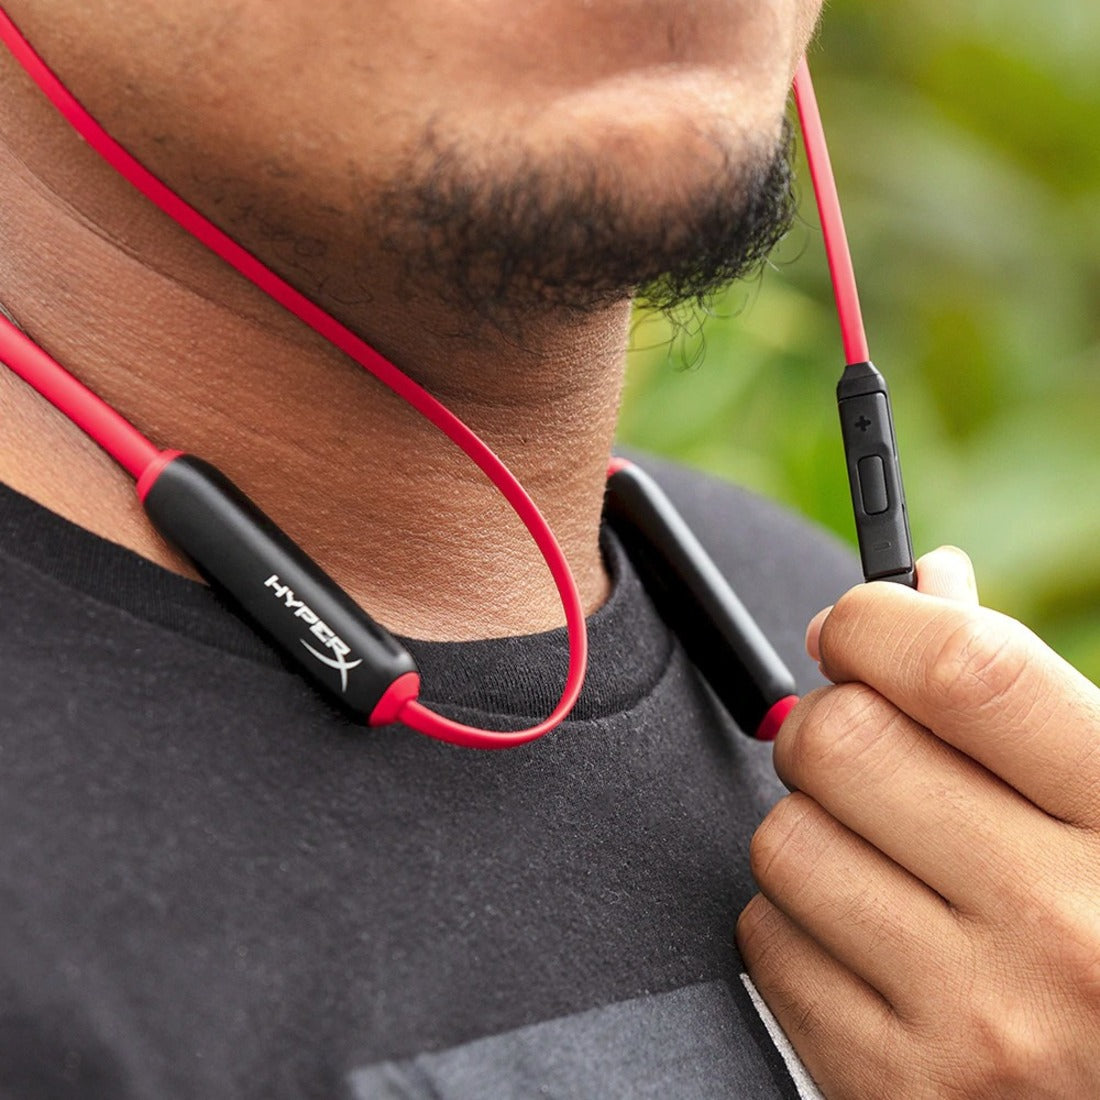 HyperX 4P5H7AA Cloud Buds Wireless Headphones (Red-Black), Lightweight, Rechargeable Battery, Comfortable